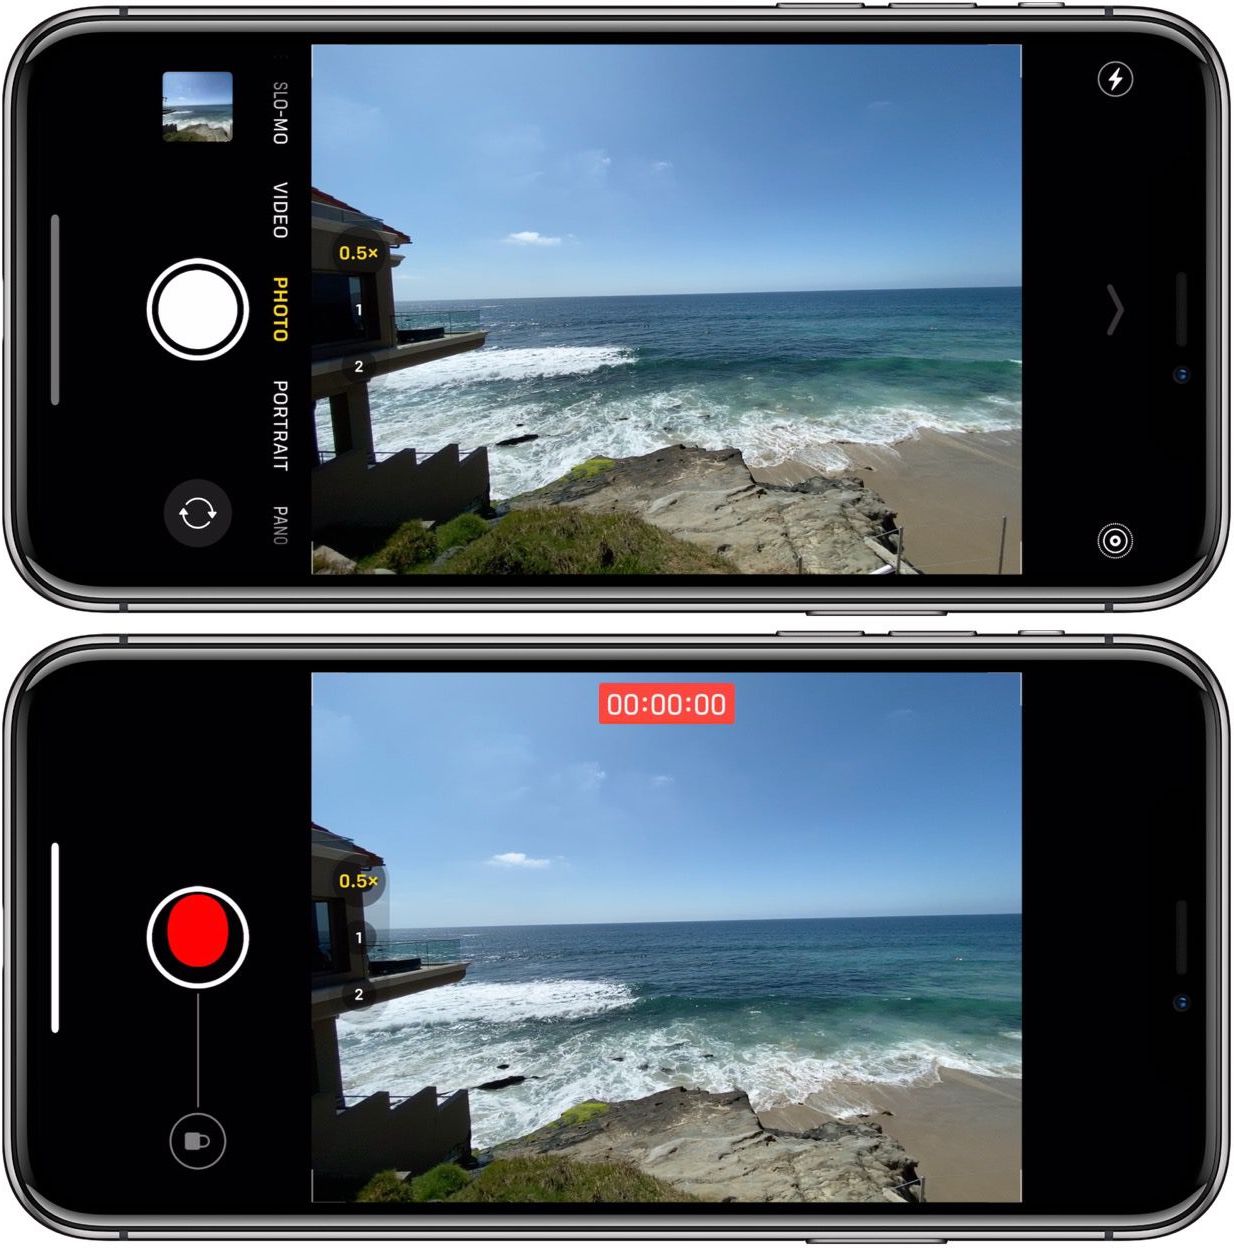 How to use burst mode iPhone 11 camera walkthrough 4